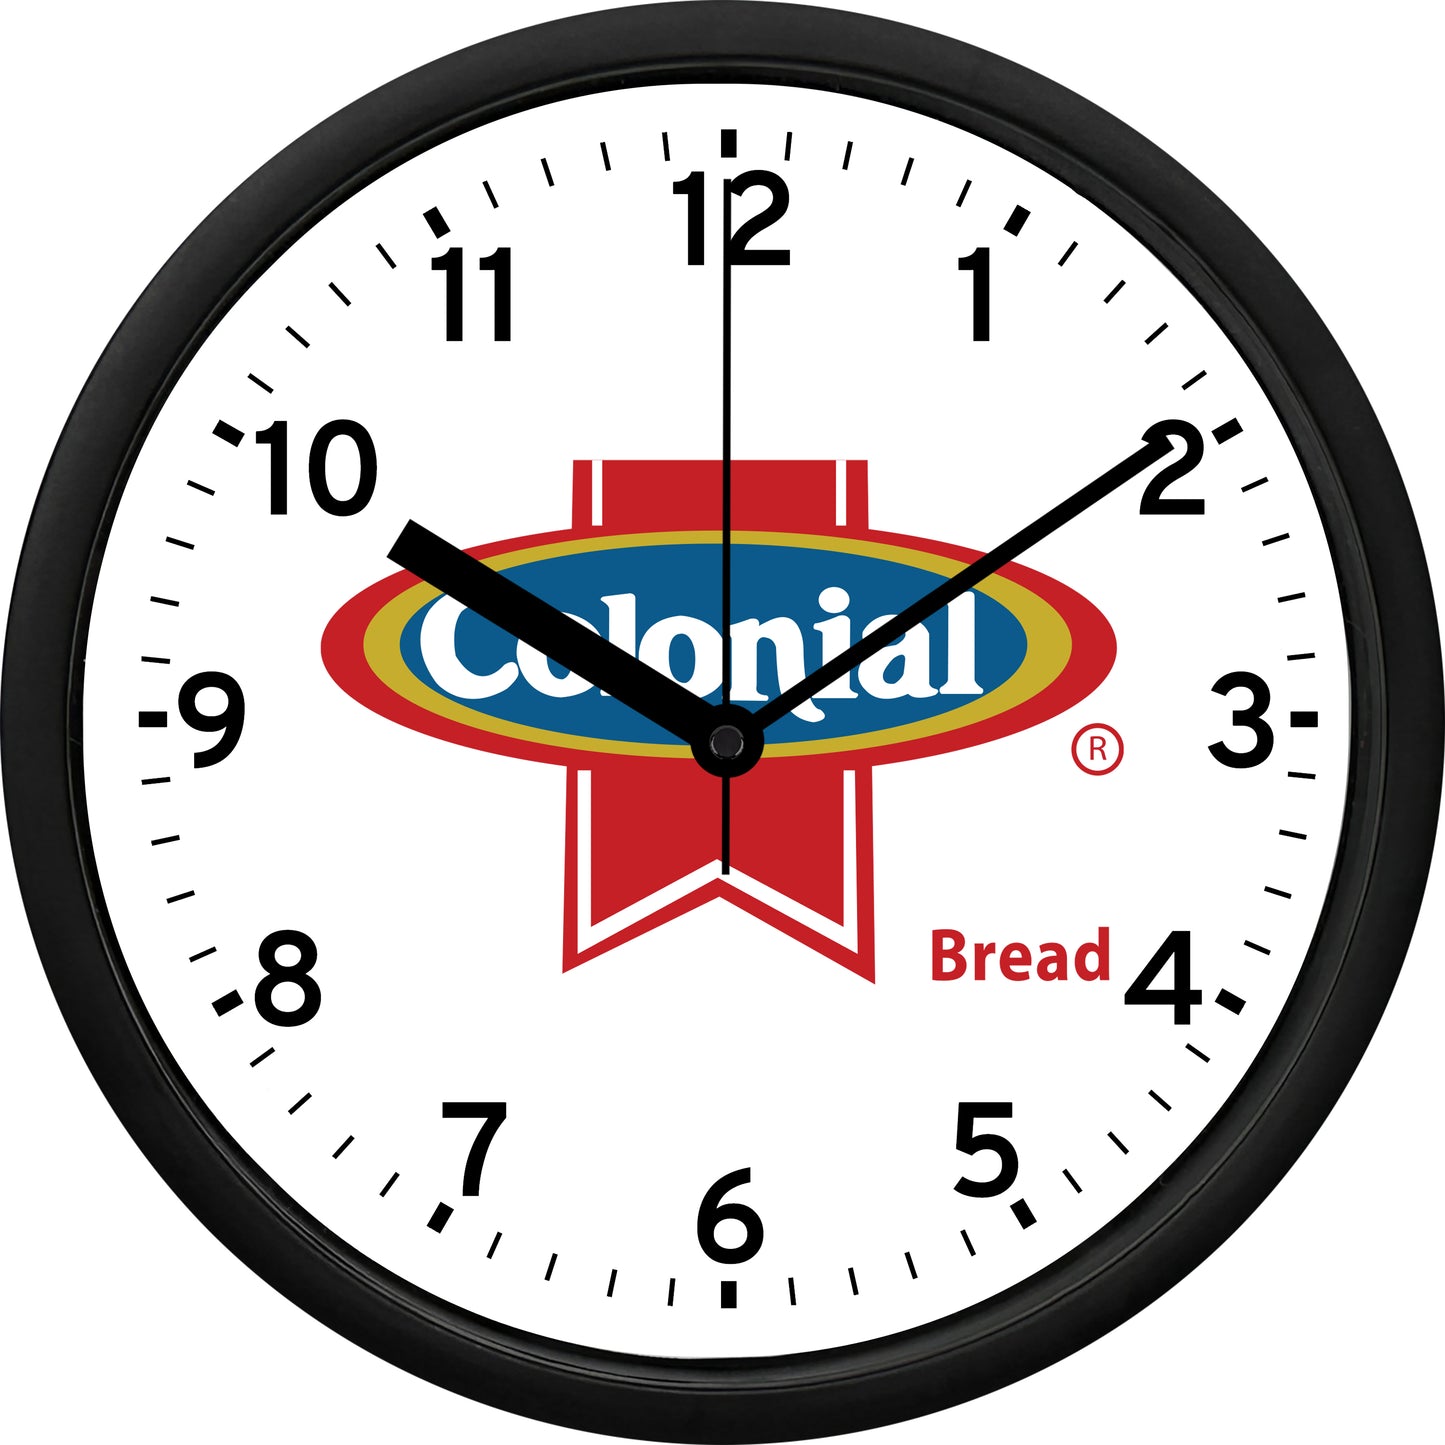 Colonial Bread Wall Clock